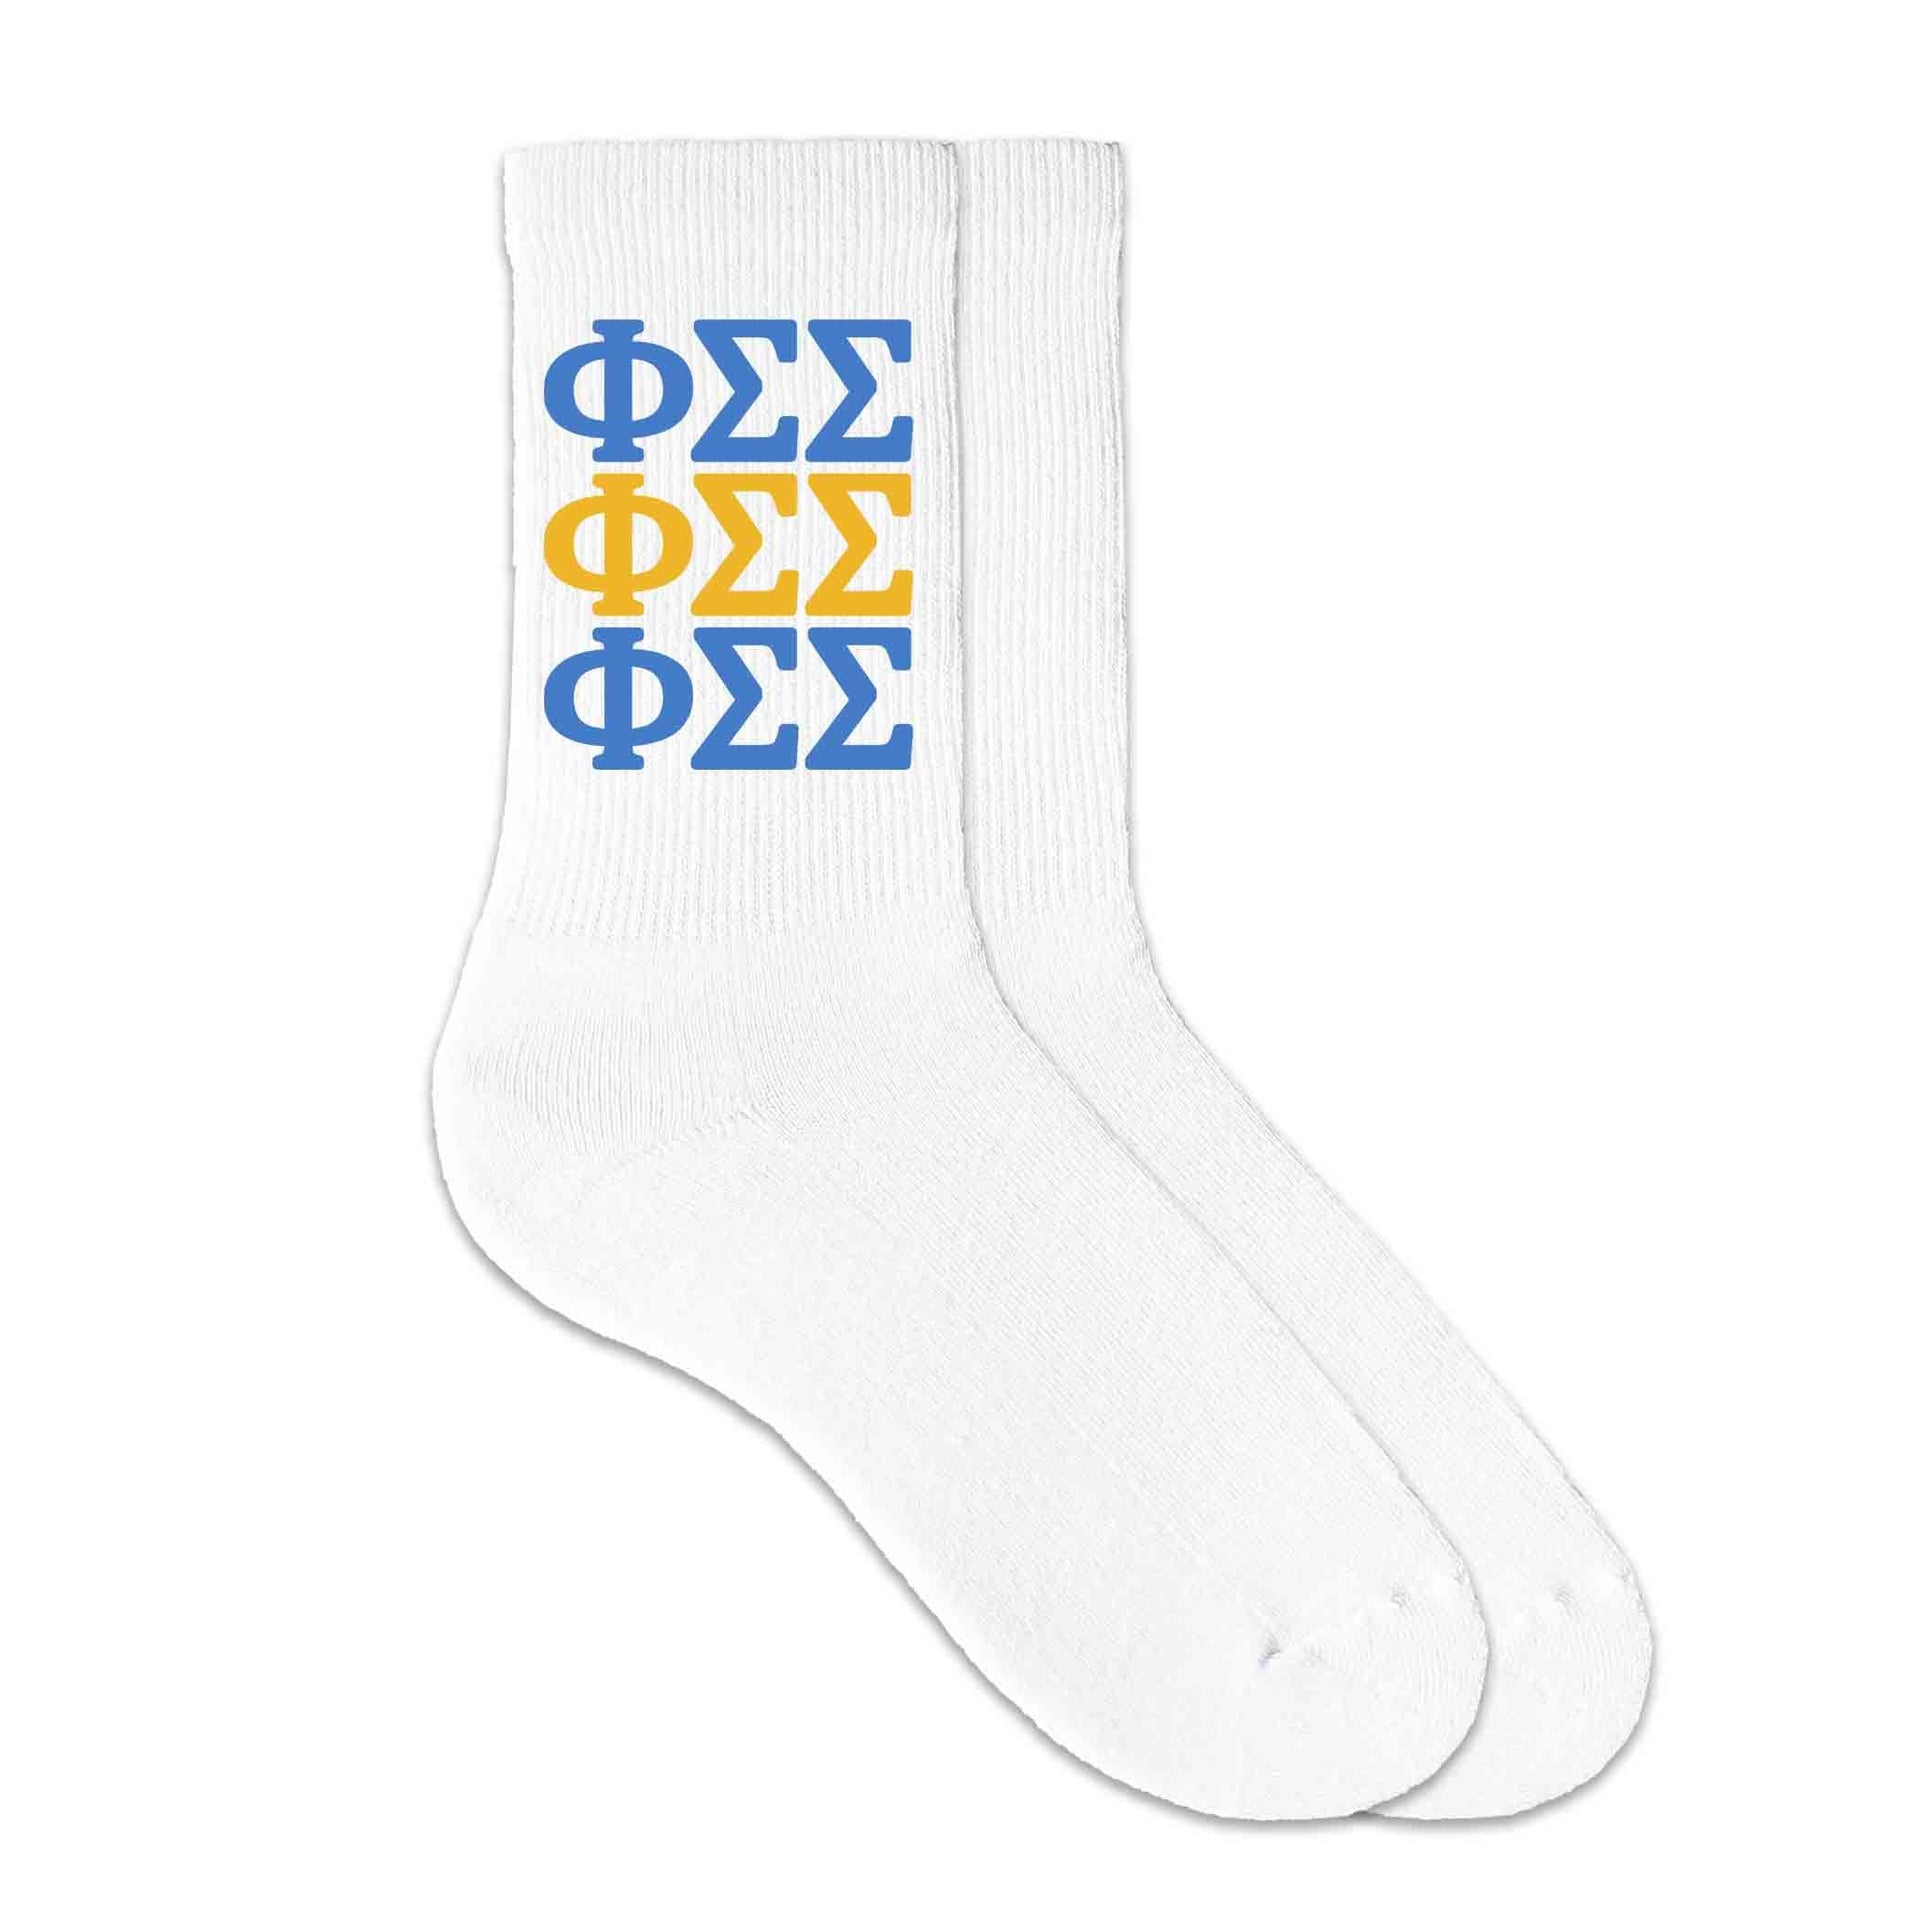 Phi Sigma Sigma repeating sorority letters custom printed on white cotton crew socks